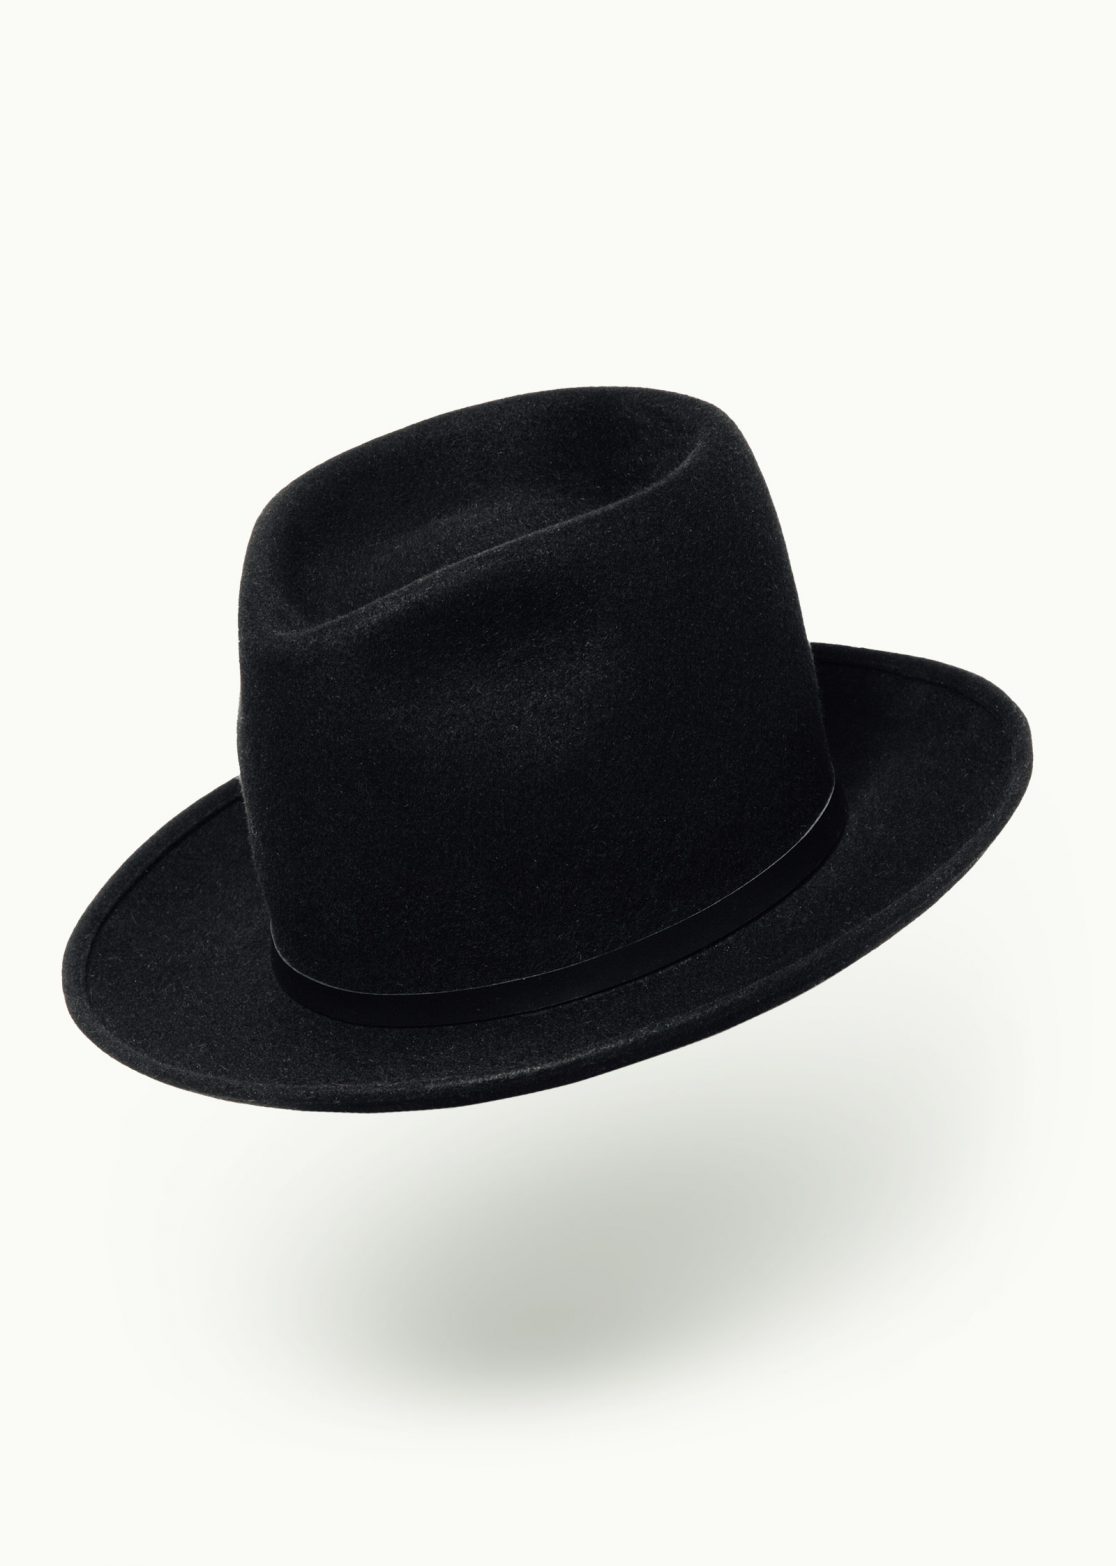 Hats - Women - Unisex - Men - Nipernadi Black Flat Image Primary